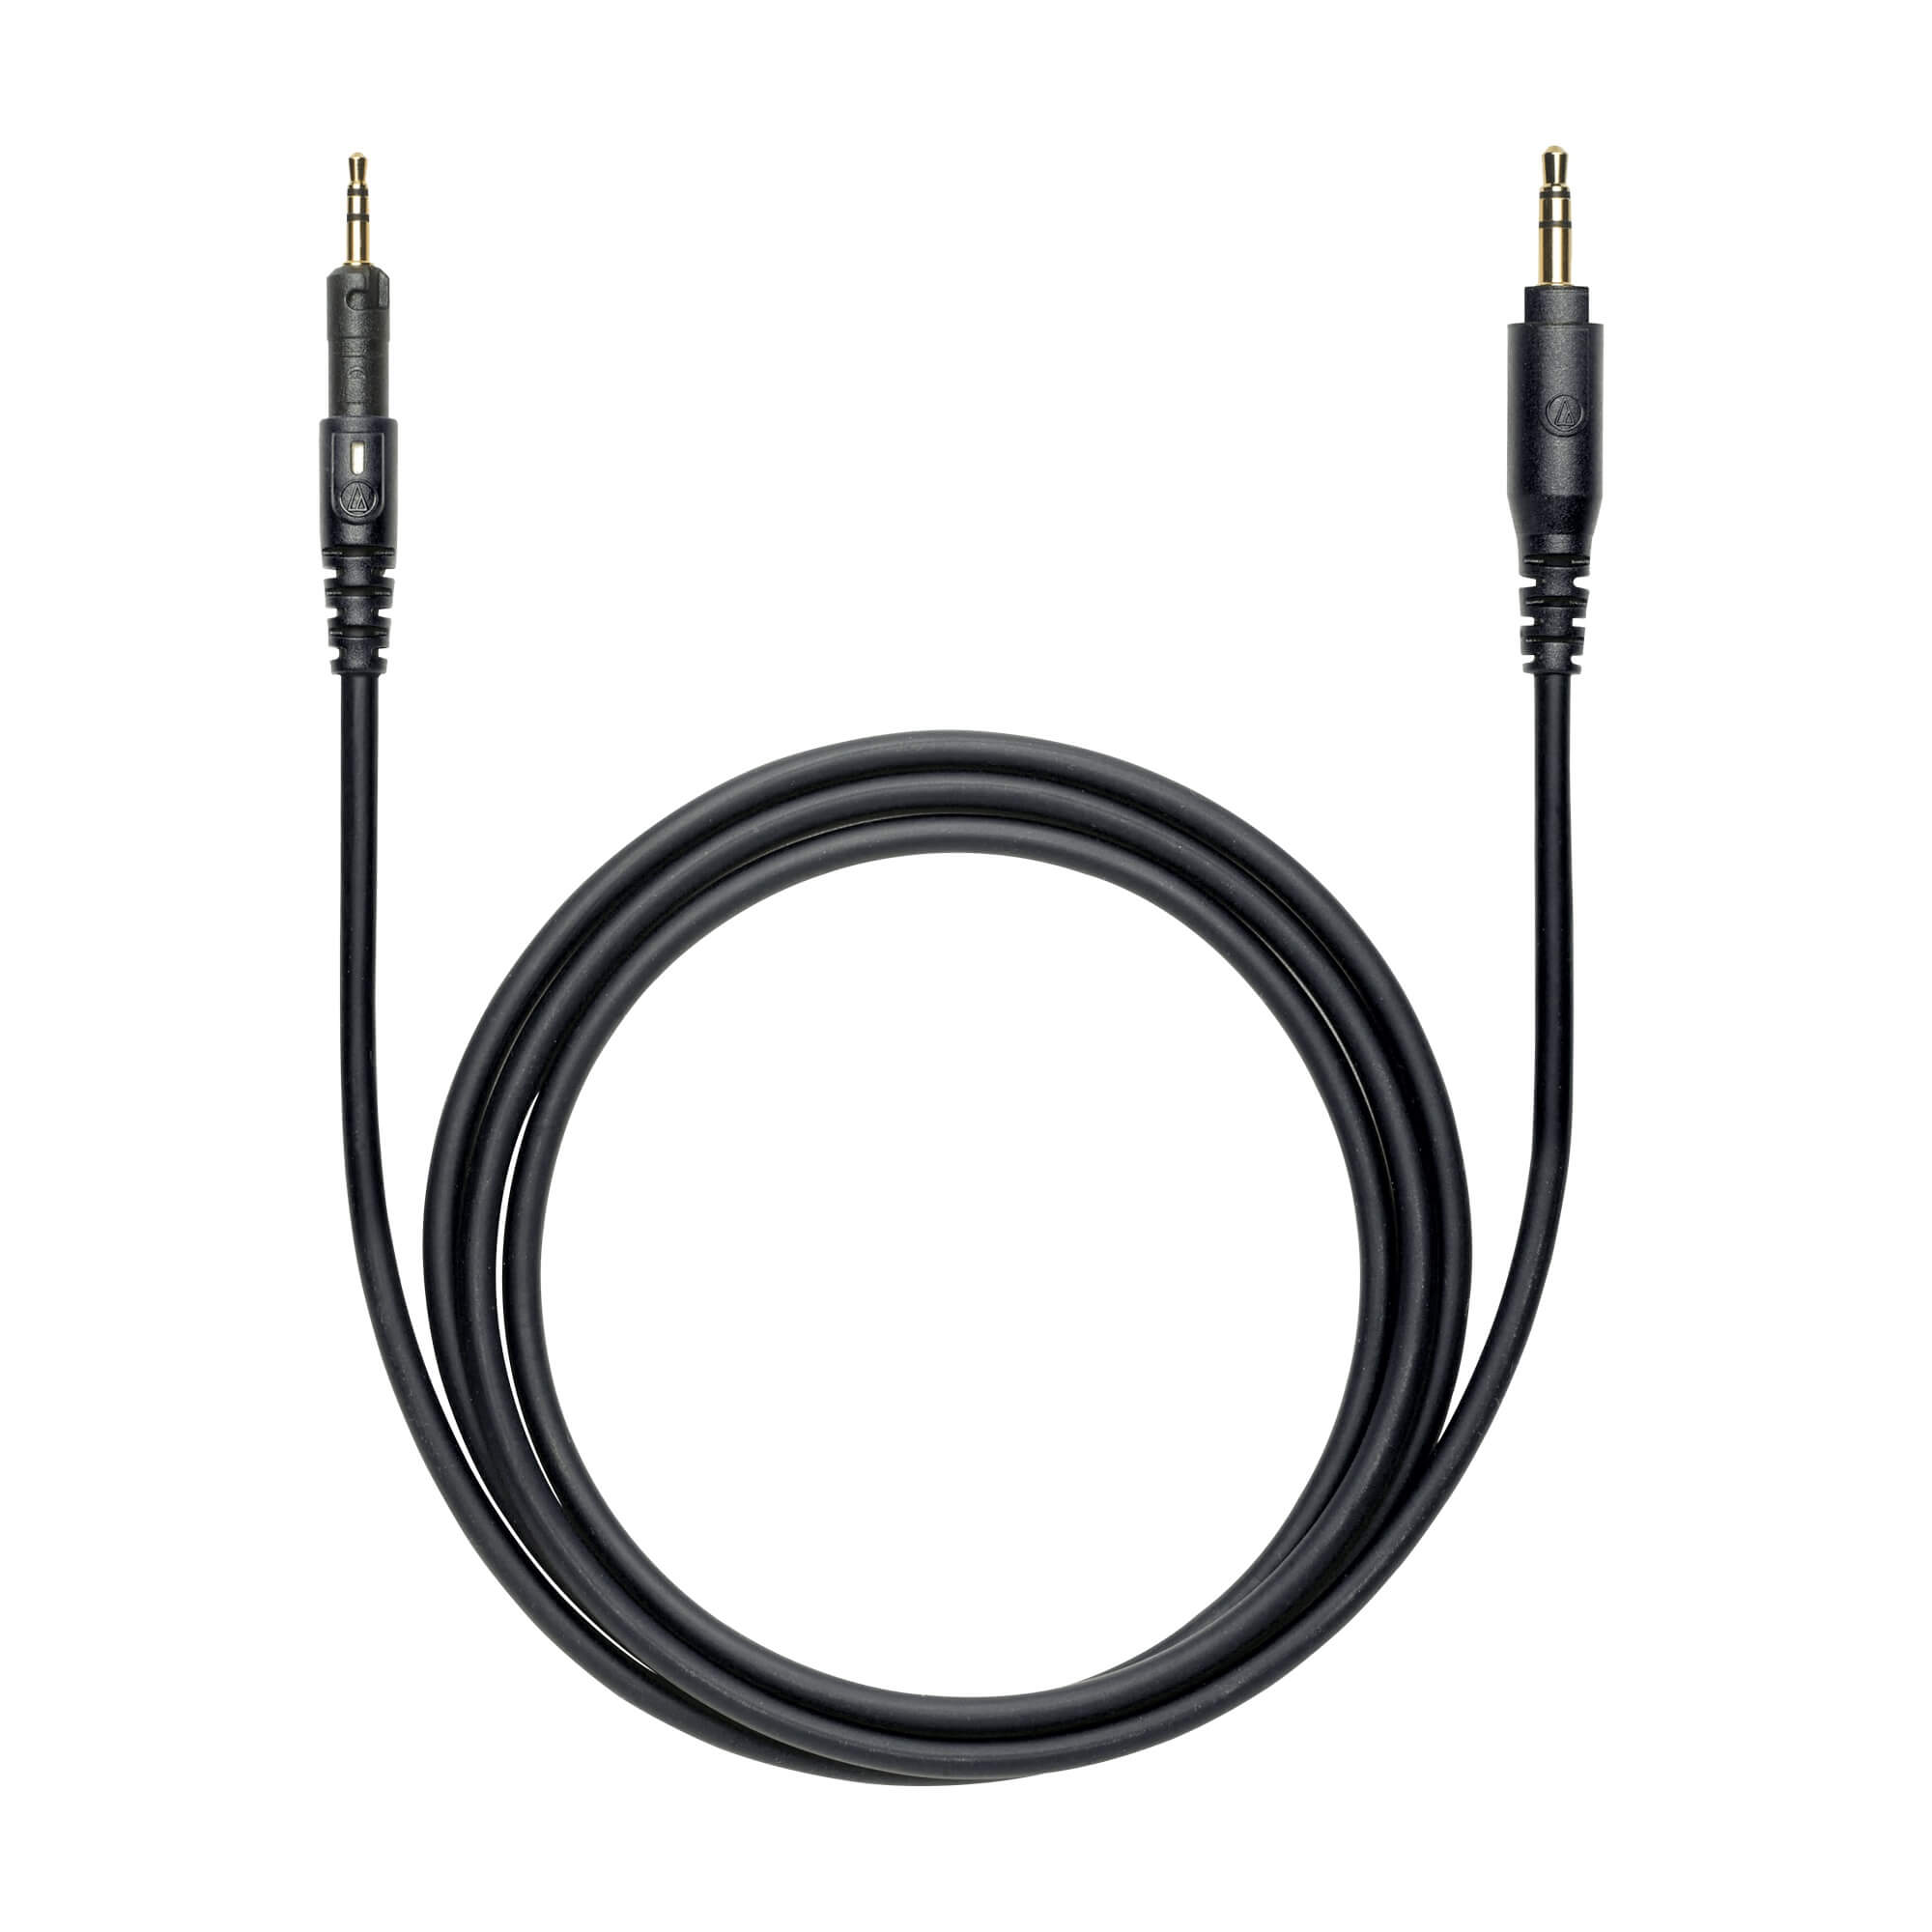 Audio-Technica ATH-M50x Professional Monitor Headphones, detachable straight cable